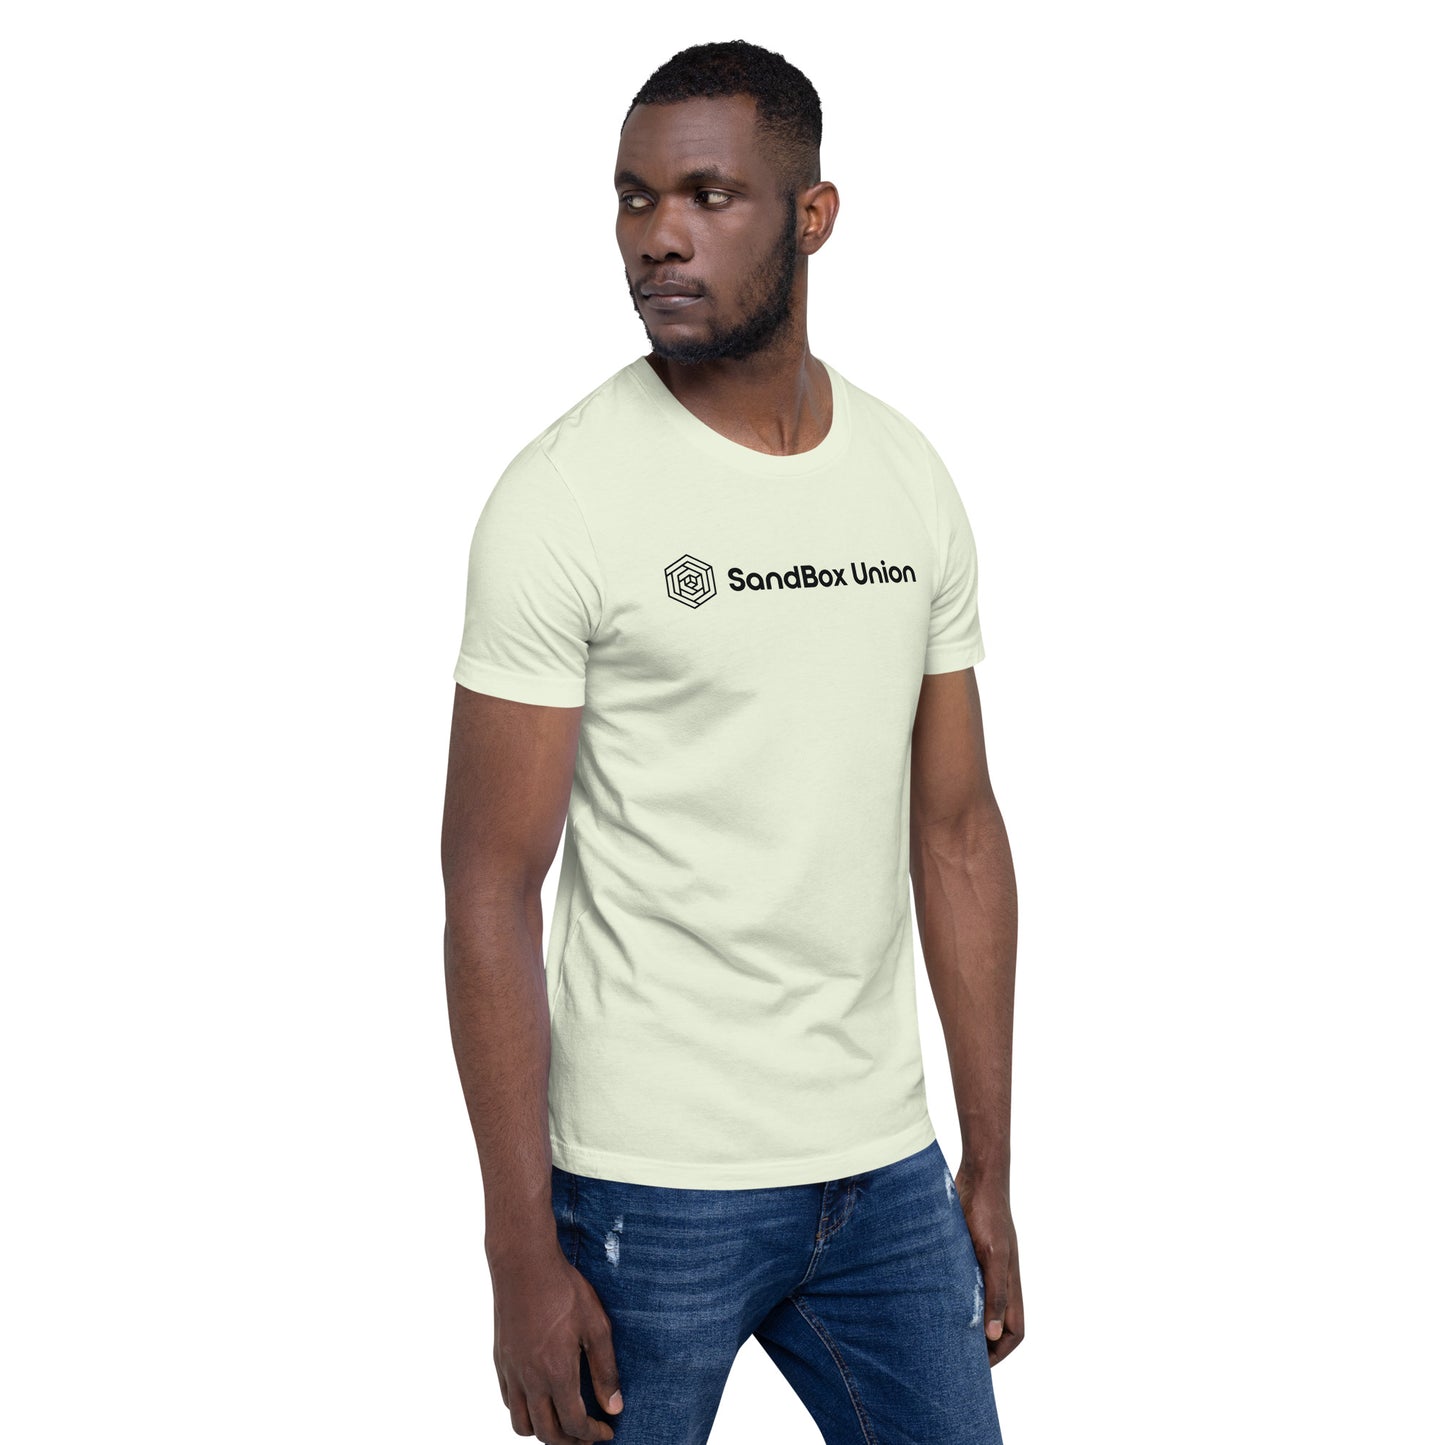 SBU Logo Tee - Unisex t-shirt